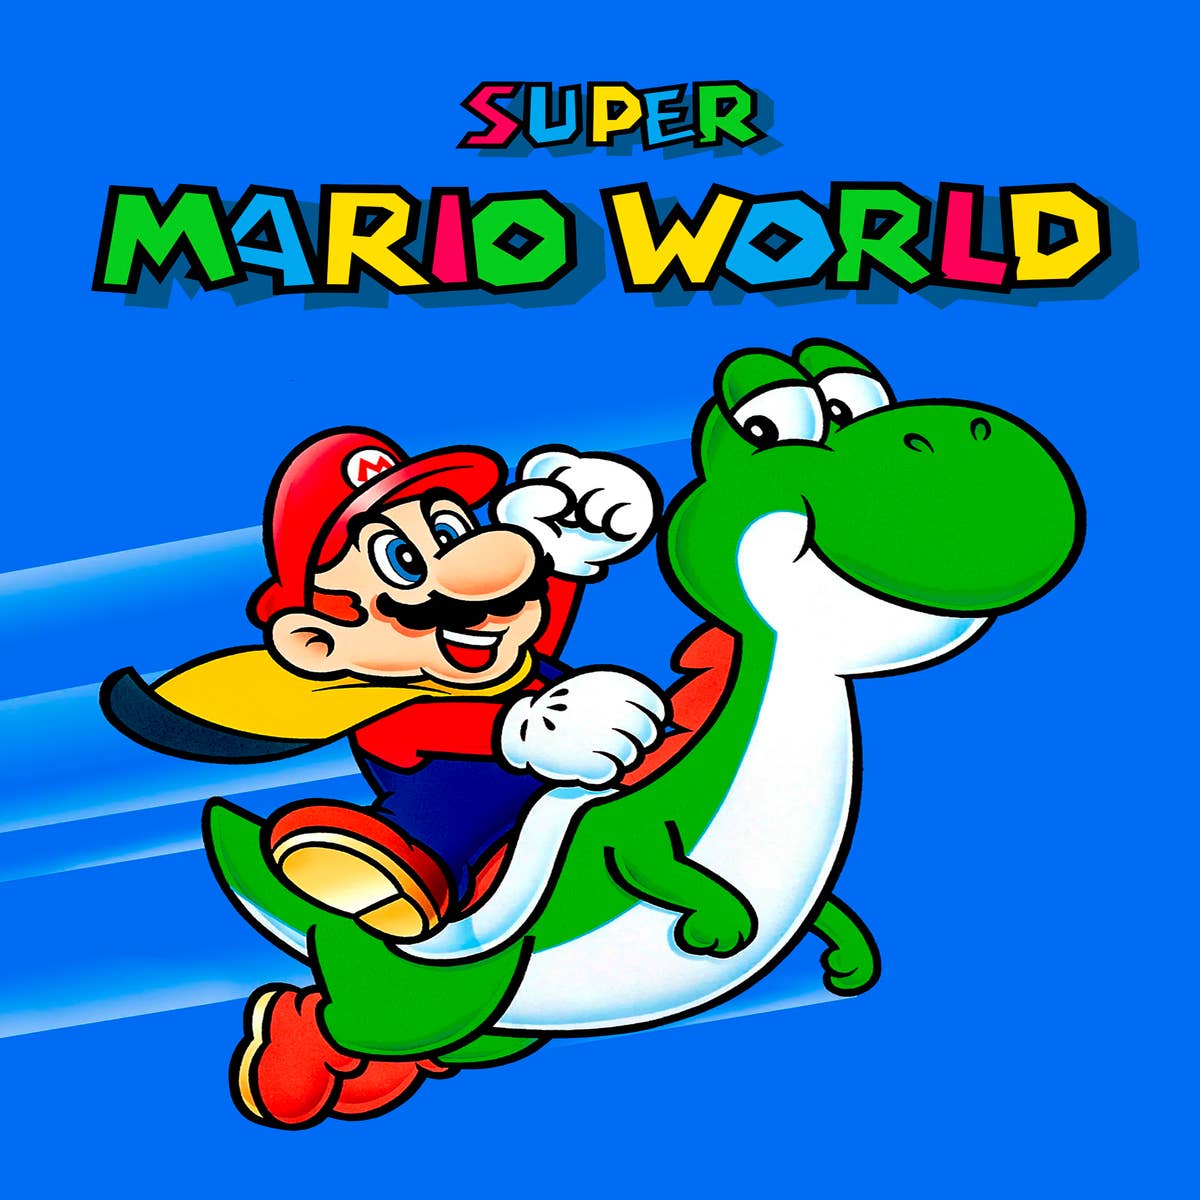 Super Mario World - Desciclopédia